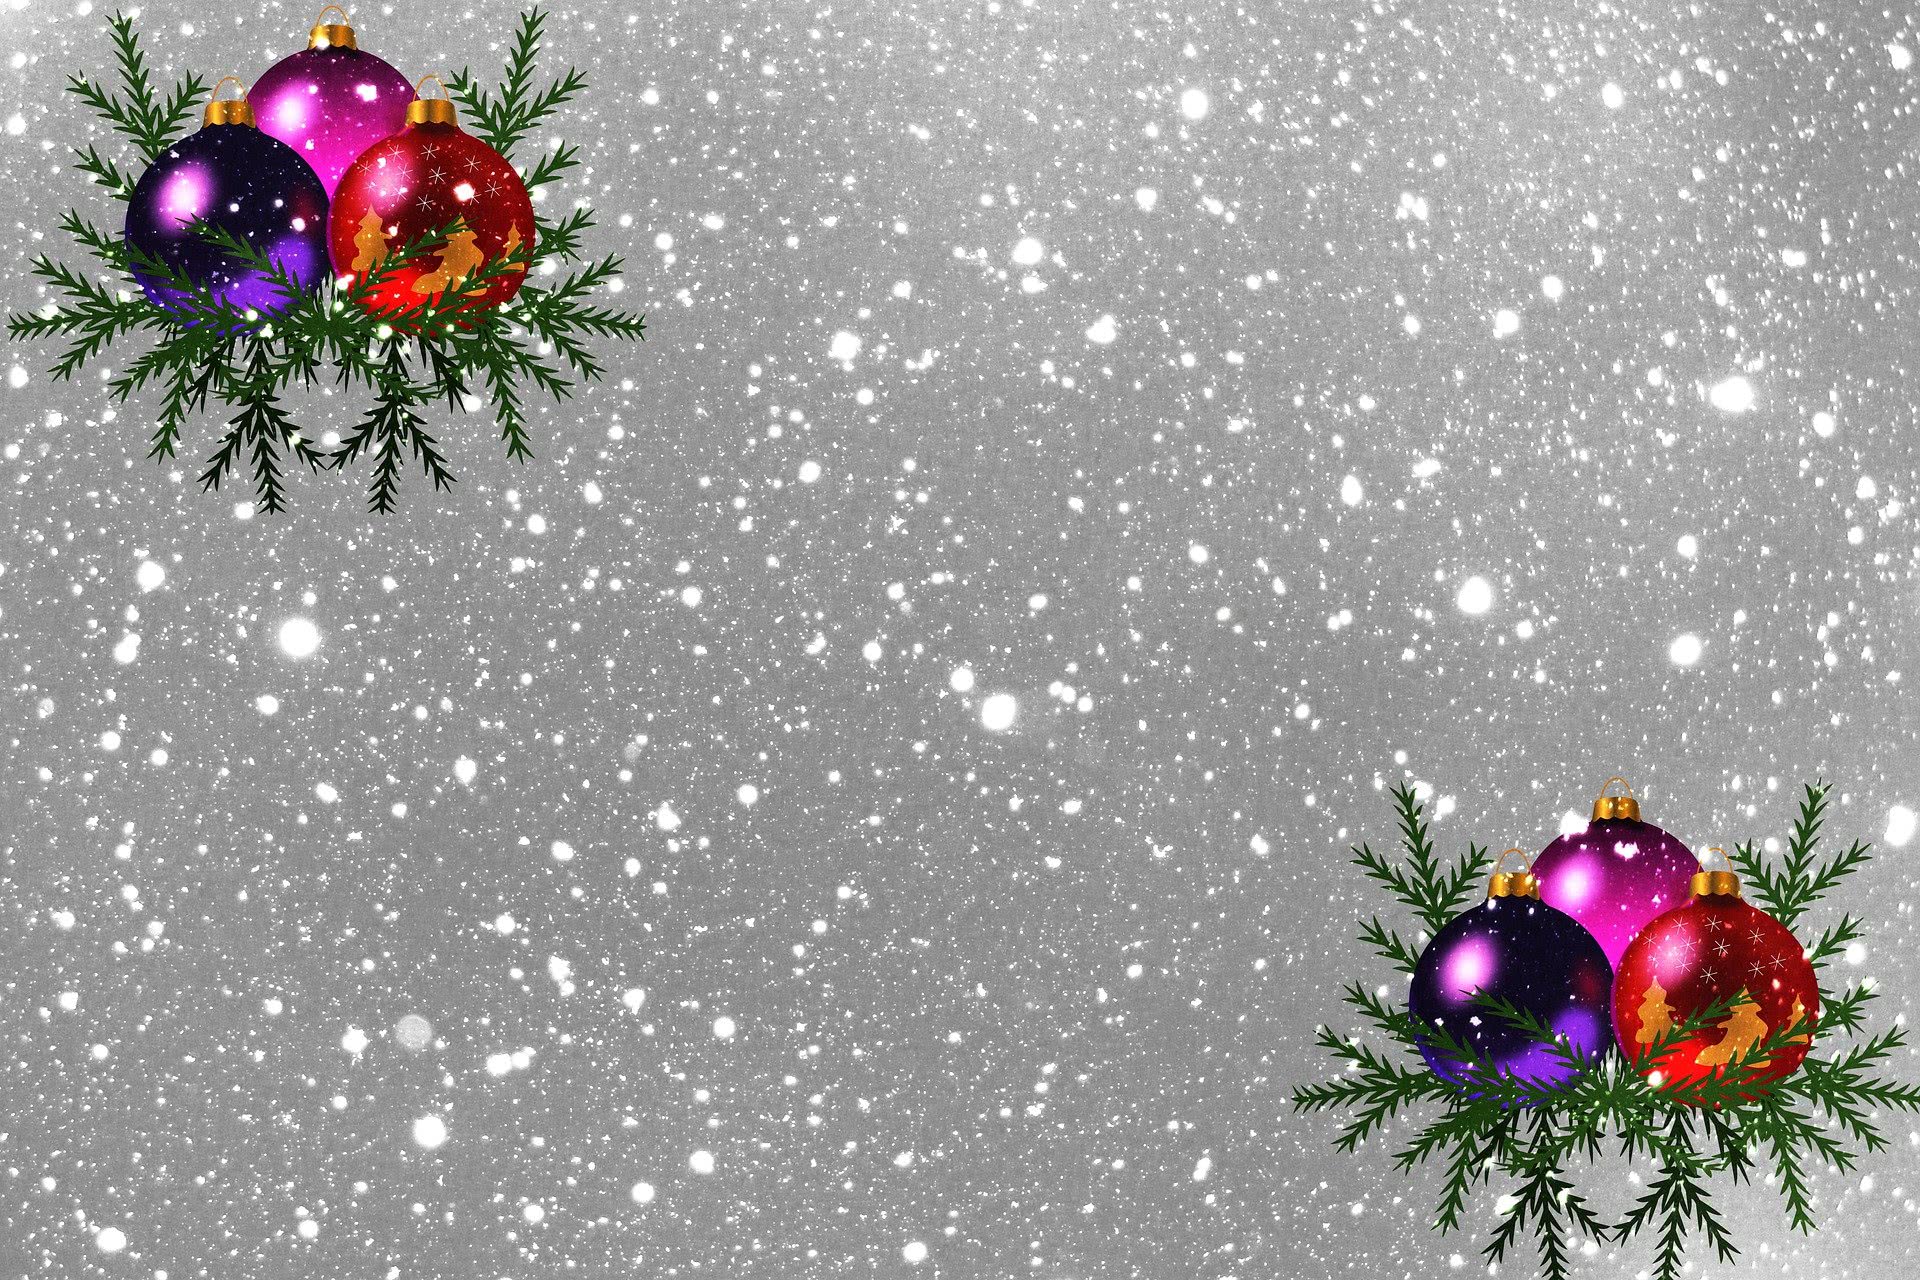 snowy ornaments